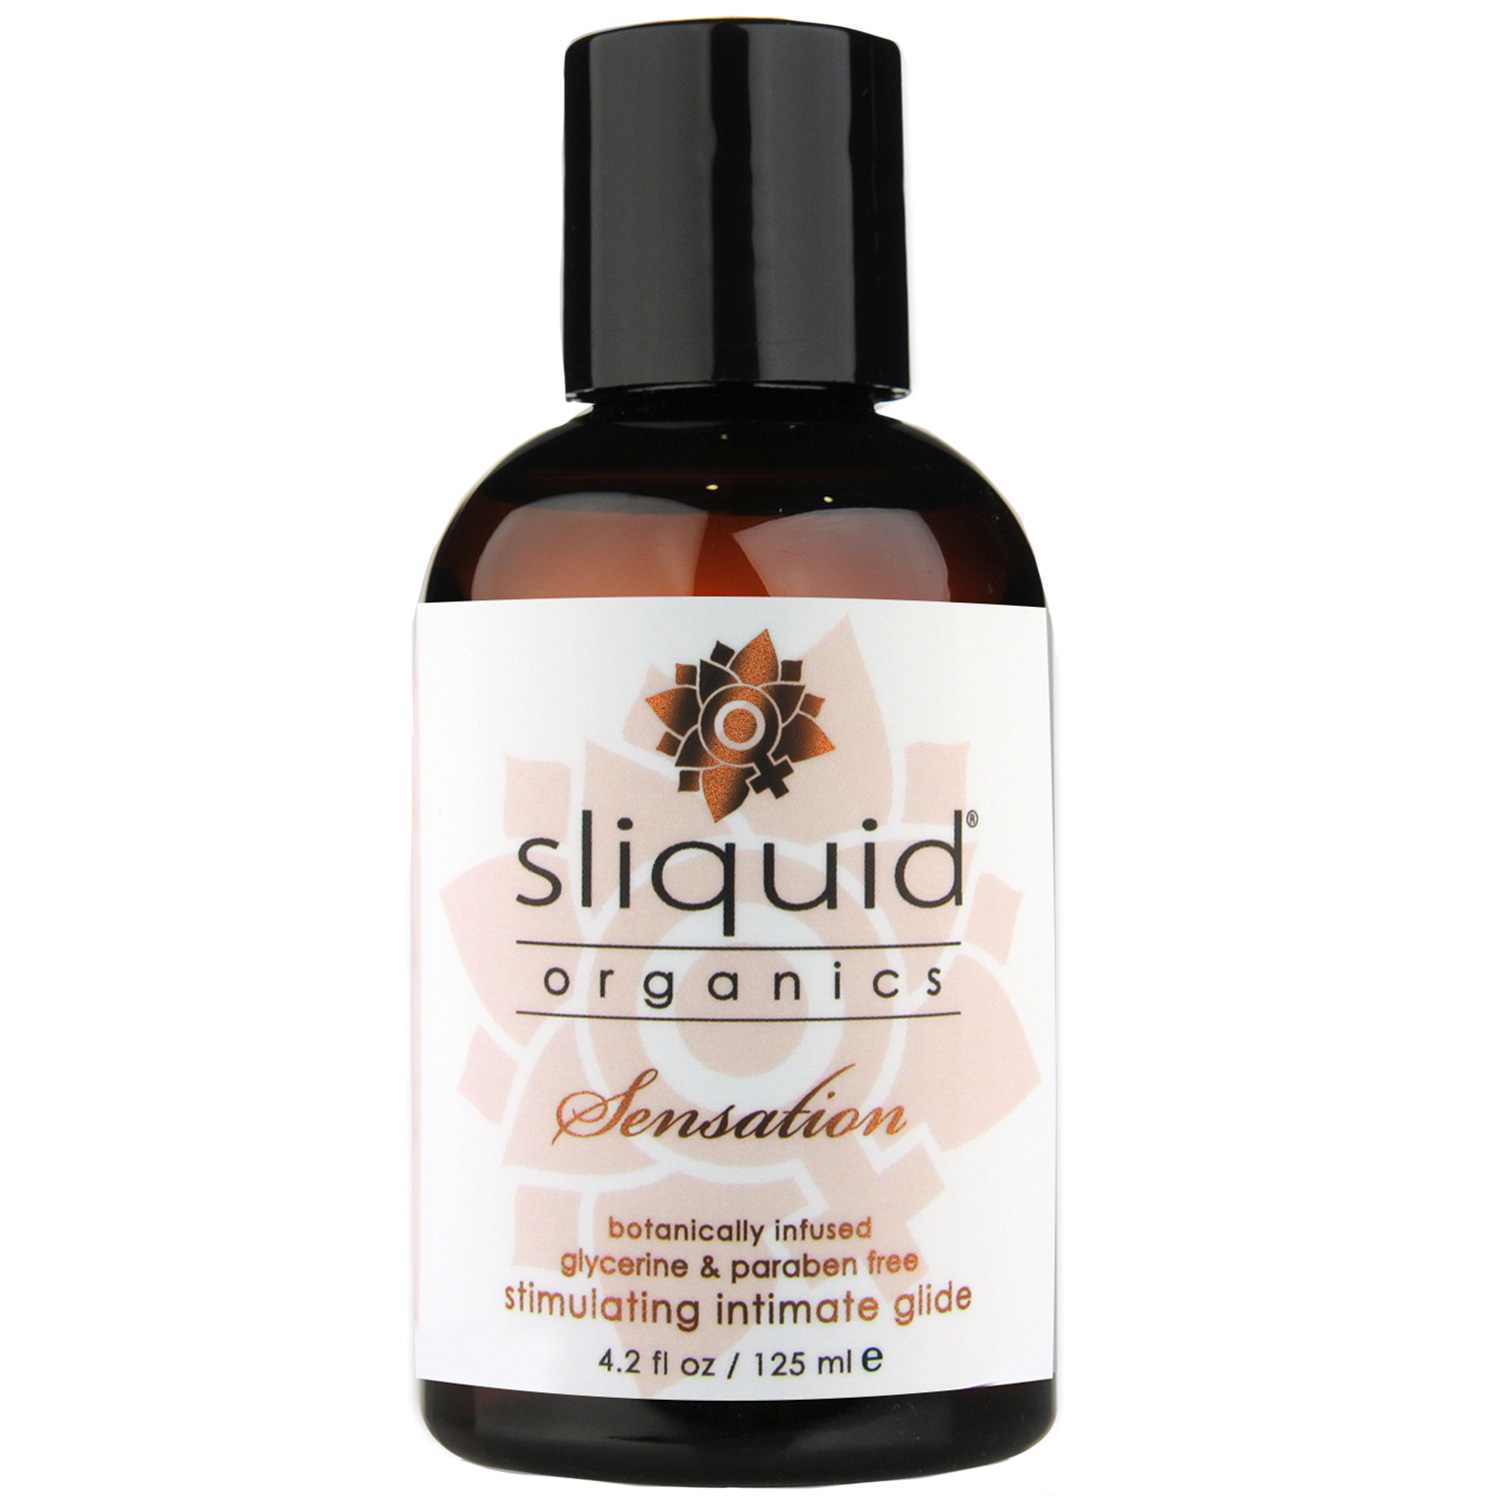 Sliquid Organic Sensations Glidecreme 125 ml     - Klar thumbnail